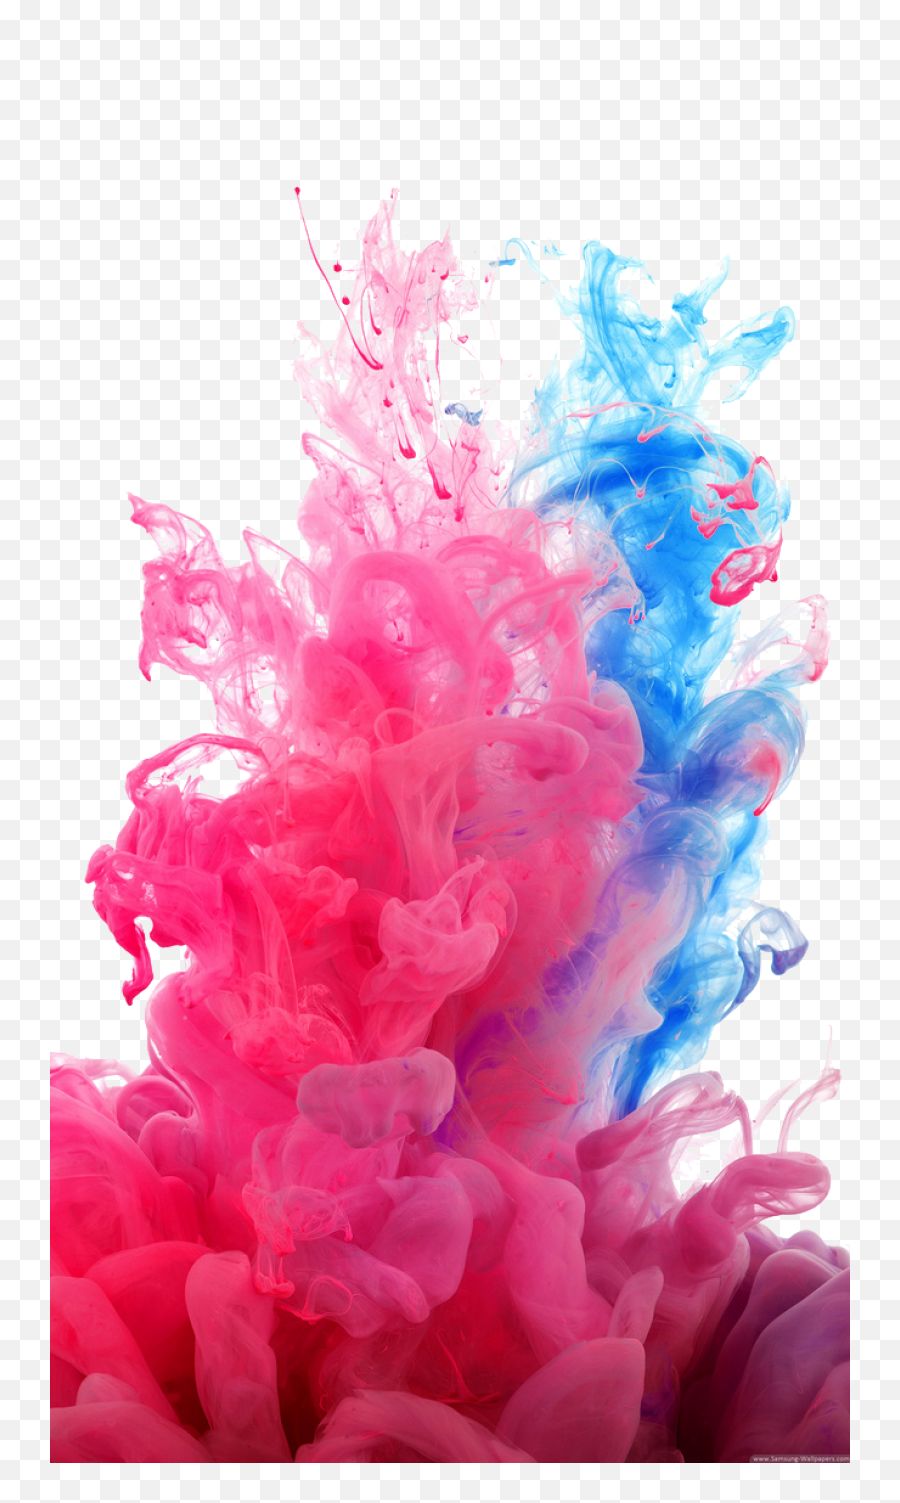 Download Colorful Smoke Png Image For Free - Fondos De Pantalla De Lg G3,Smoke Png